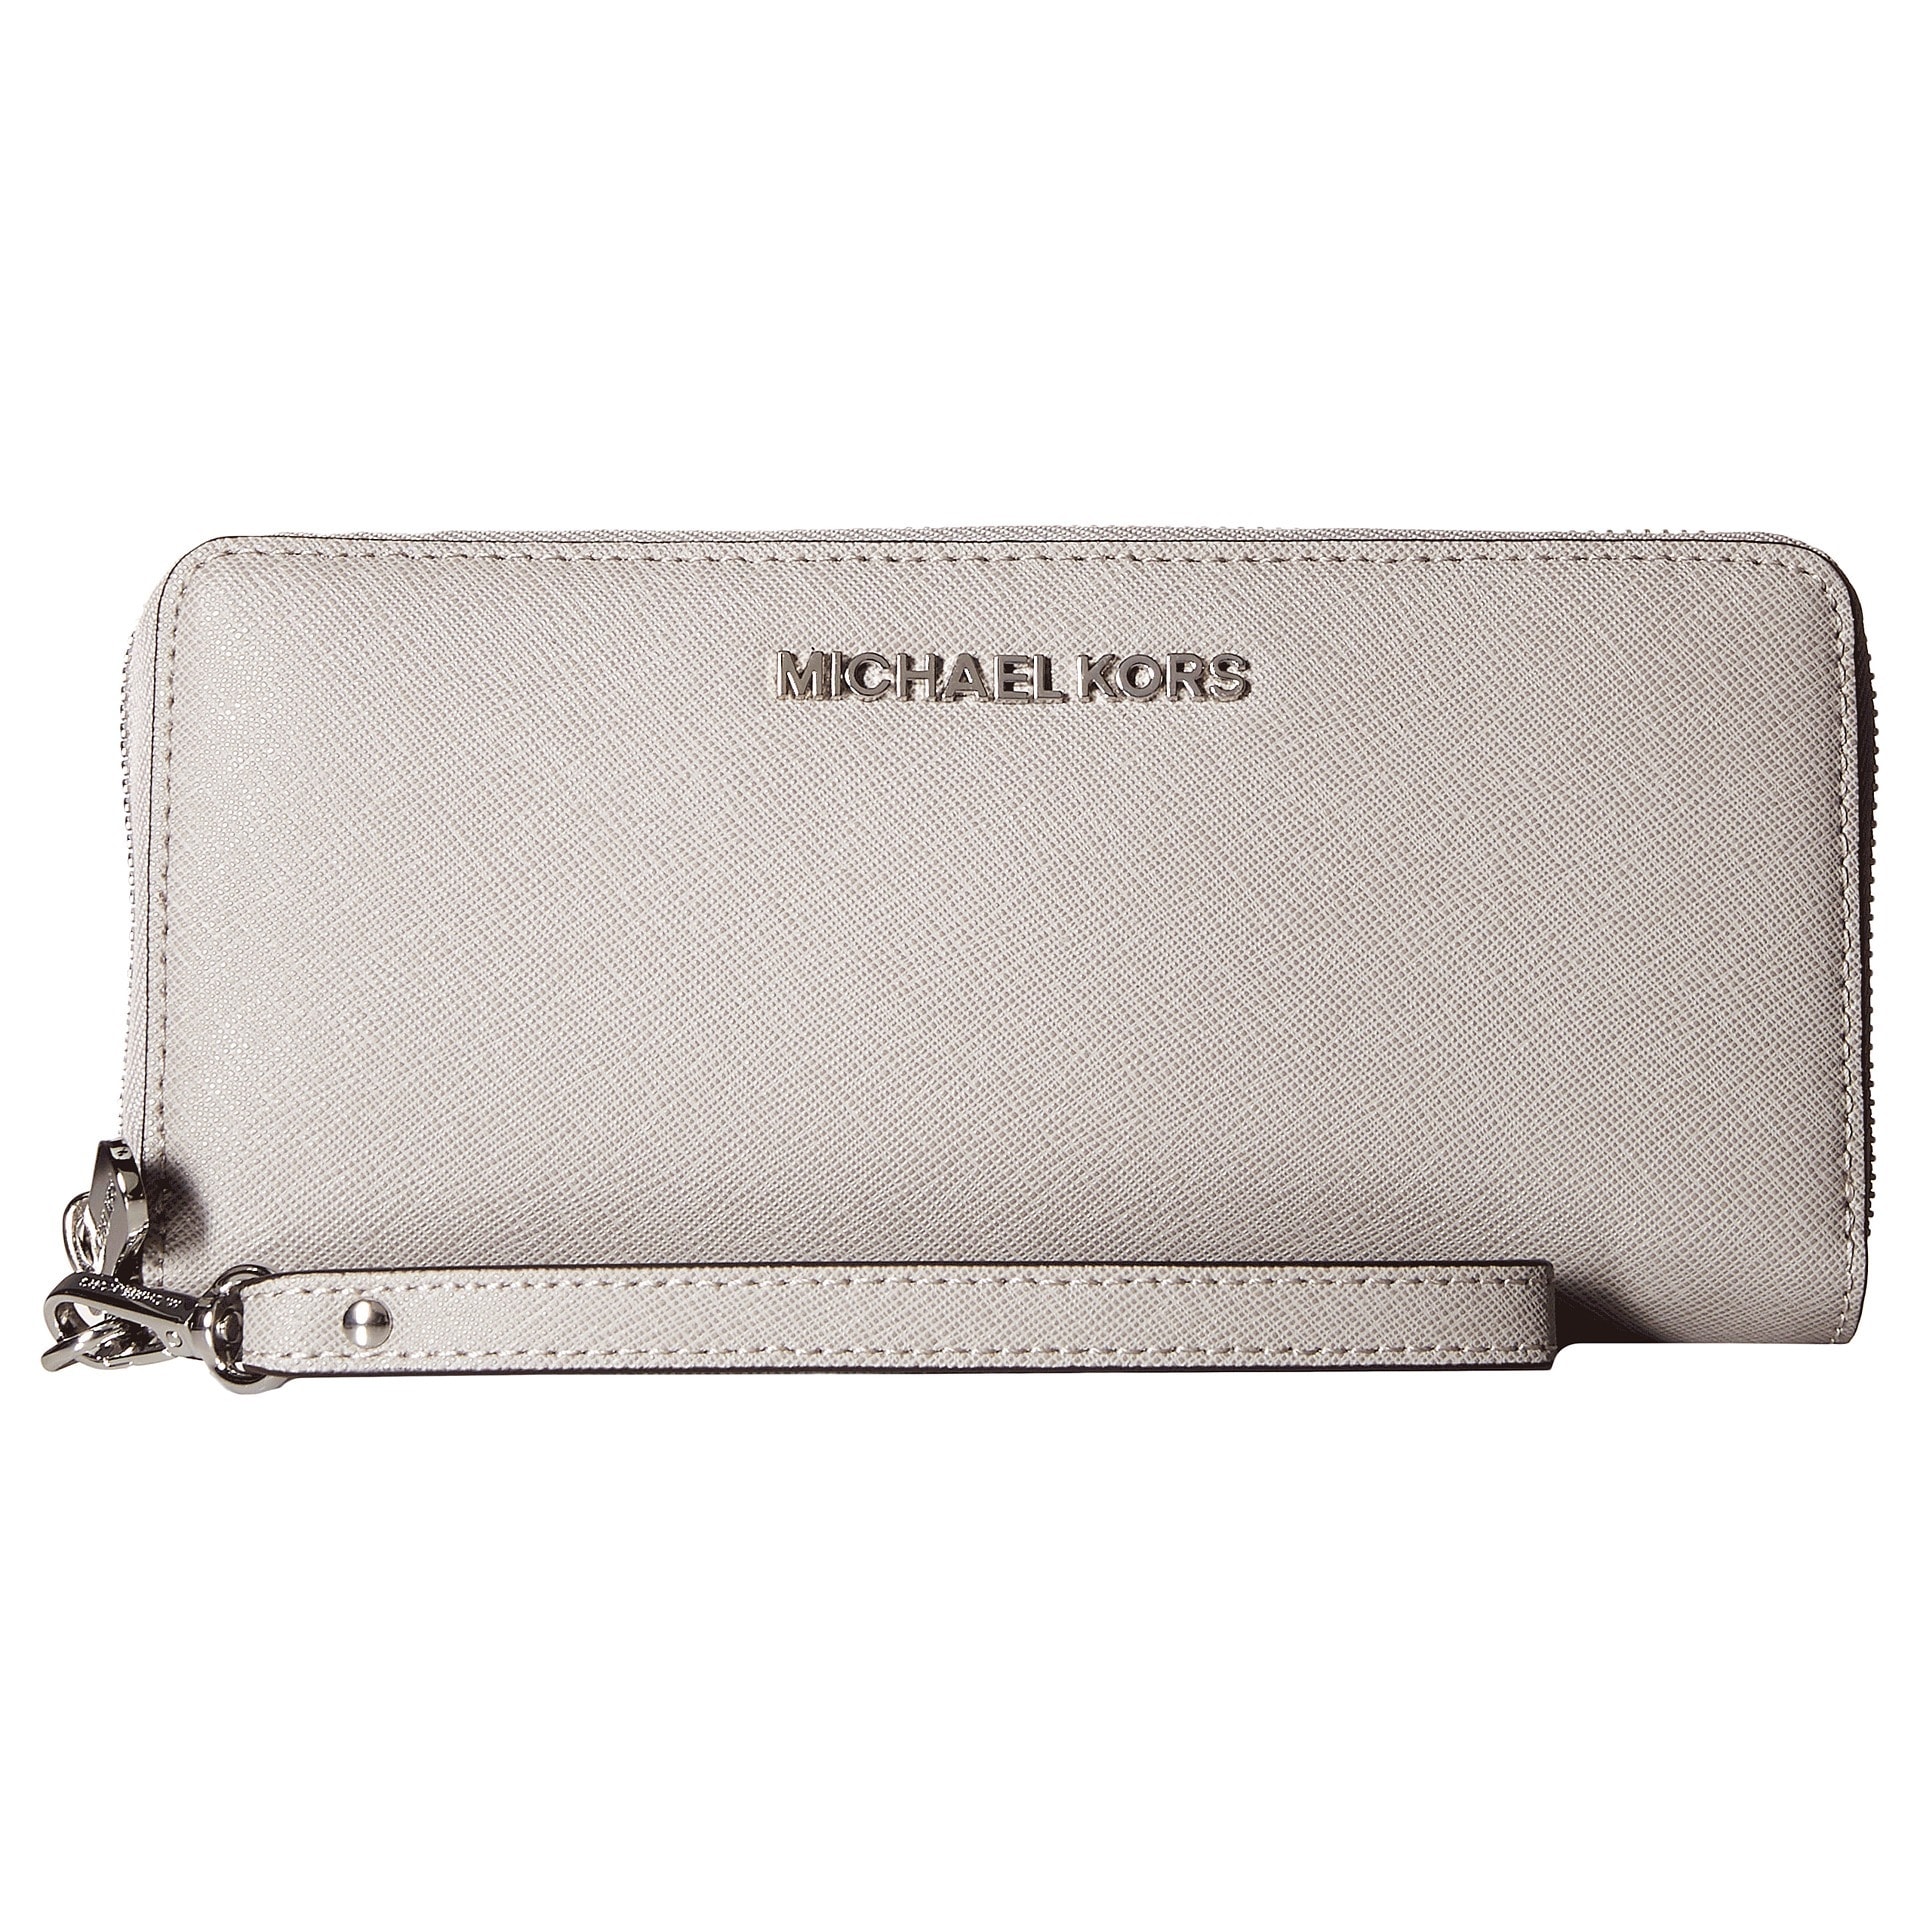 black and grey michael kors wallet